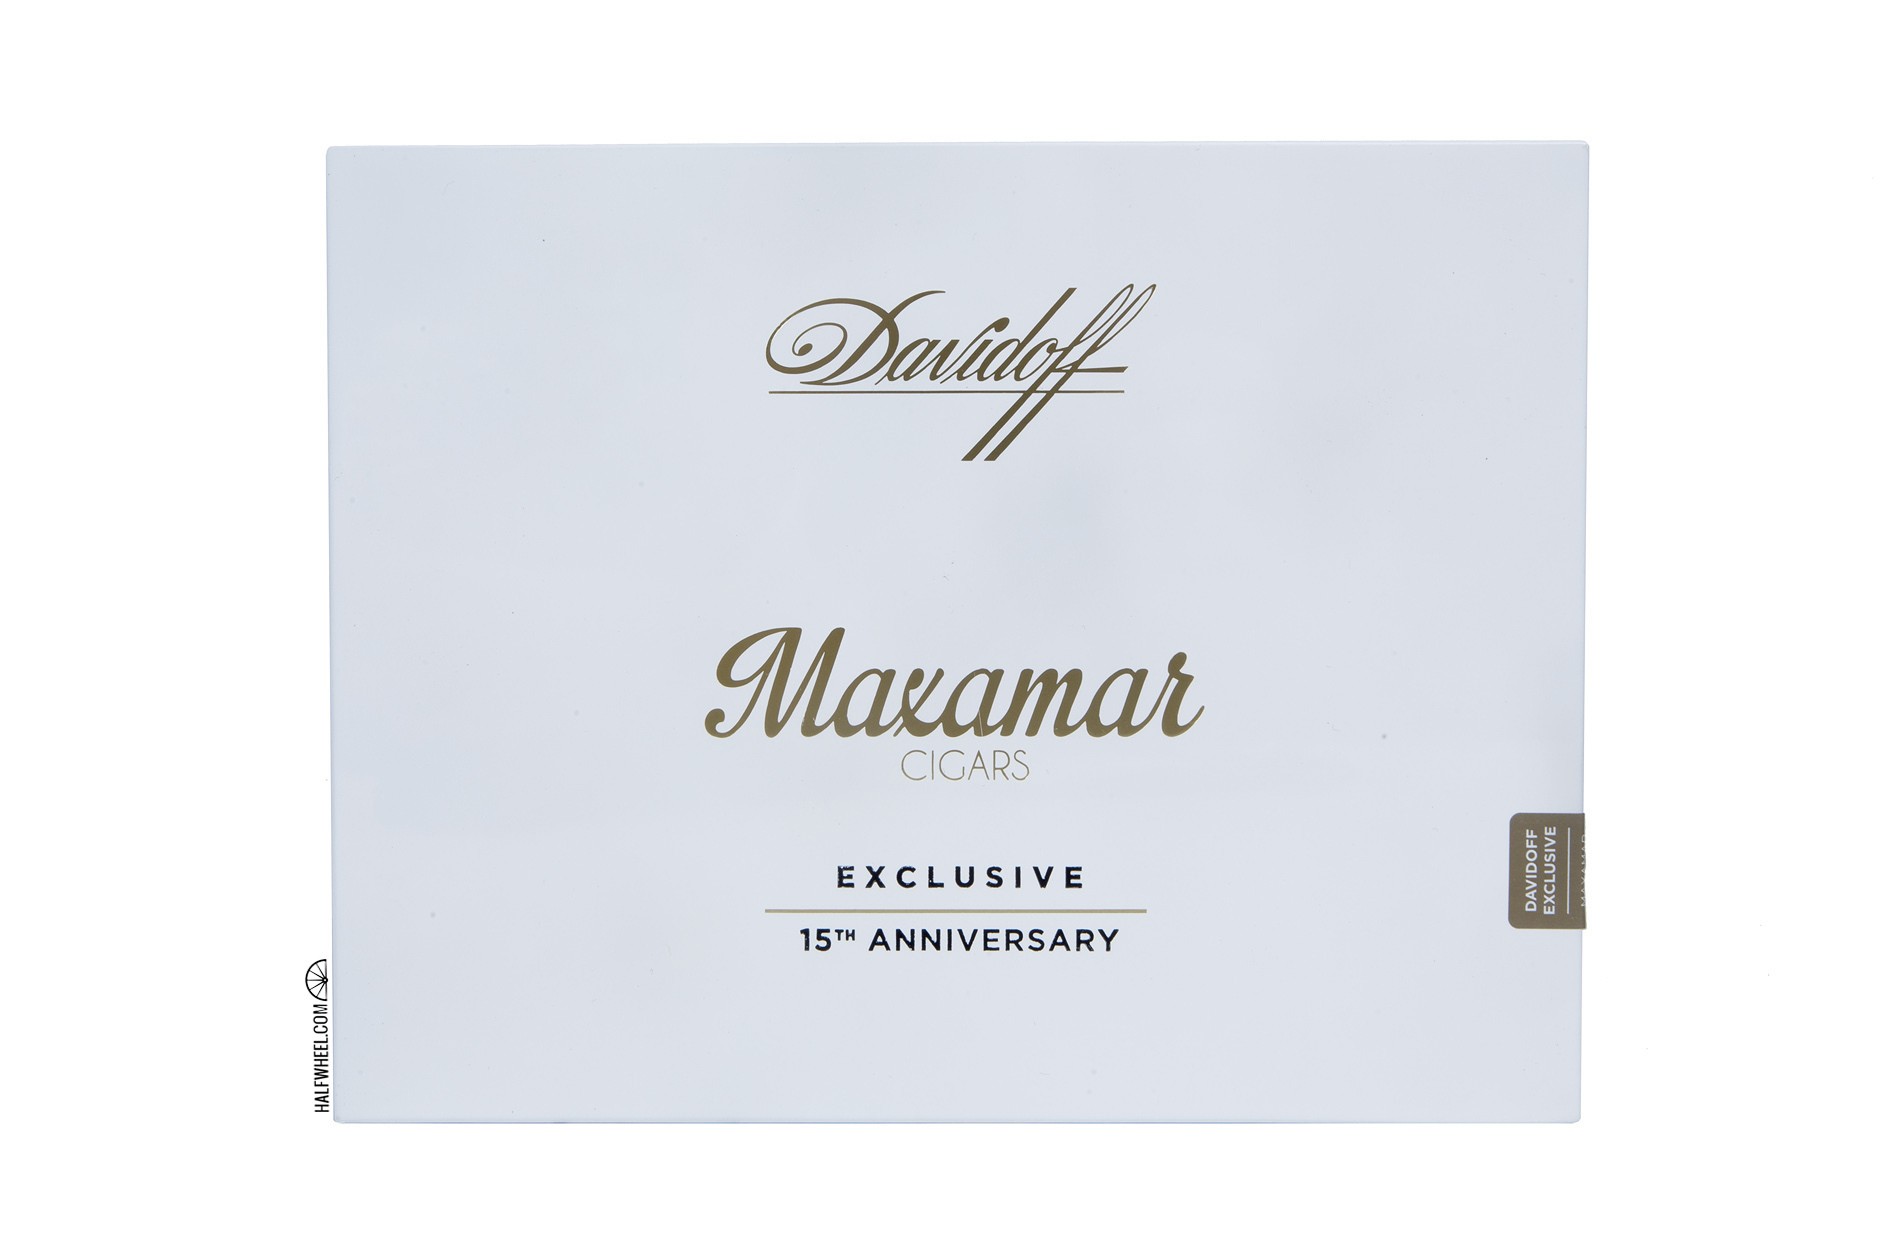 Davidoff Maxamar Ultimate Cigars 15th Anniversary Box